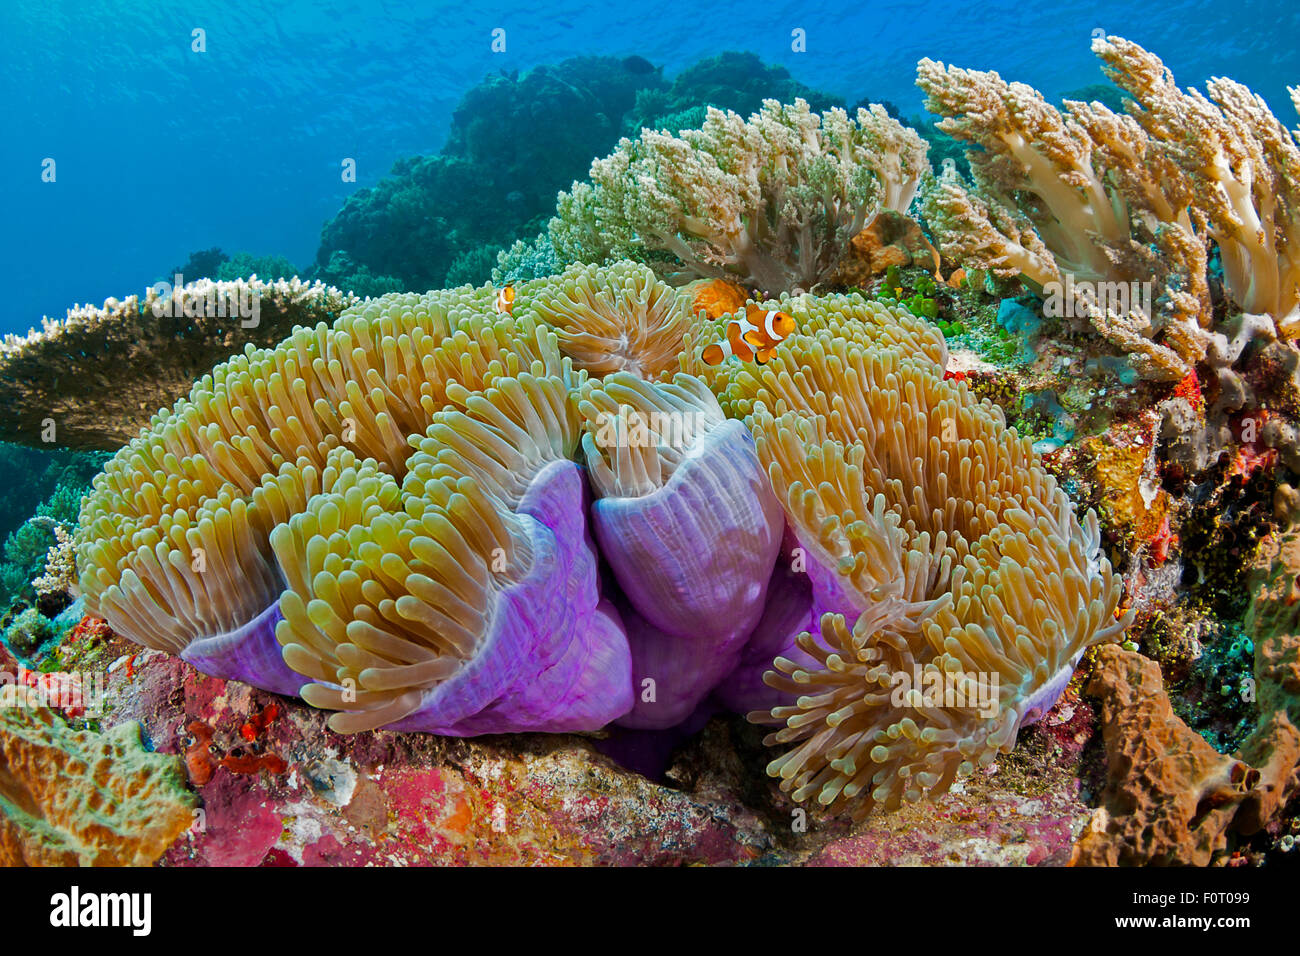 Clown anemonefish, Amphiprion percula, in anemone, Heteractis magnifica, Komodo, Indonesia. Stock Photo